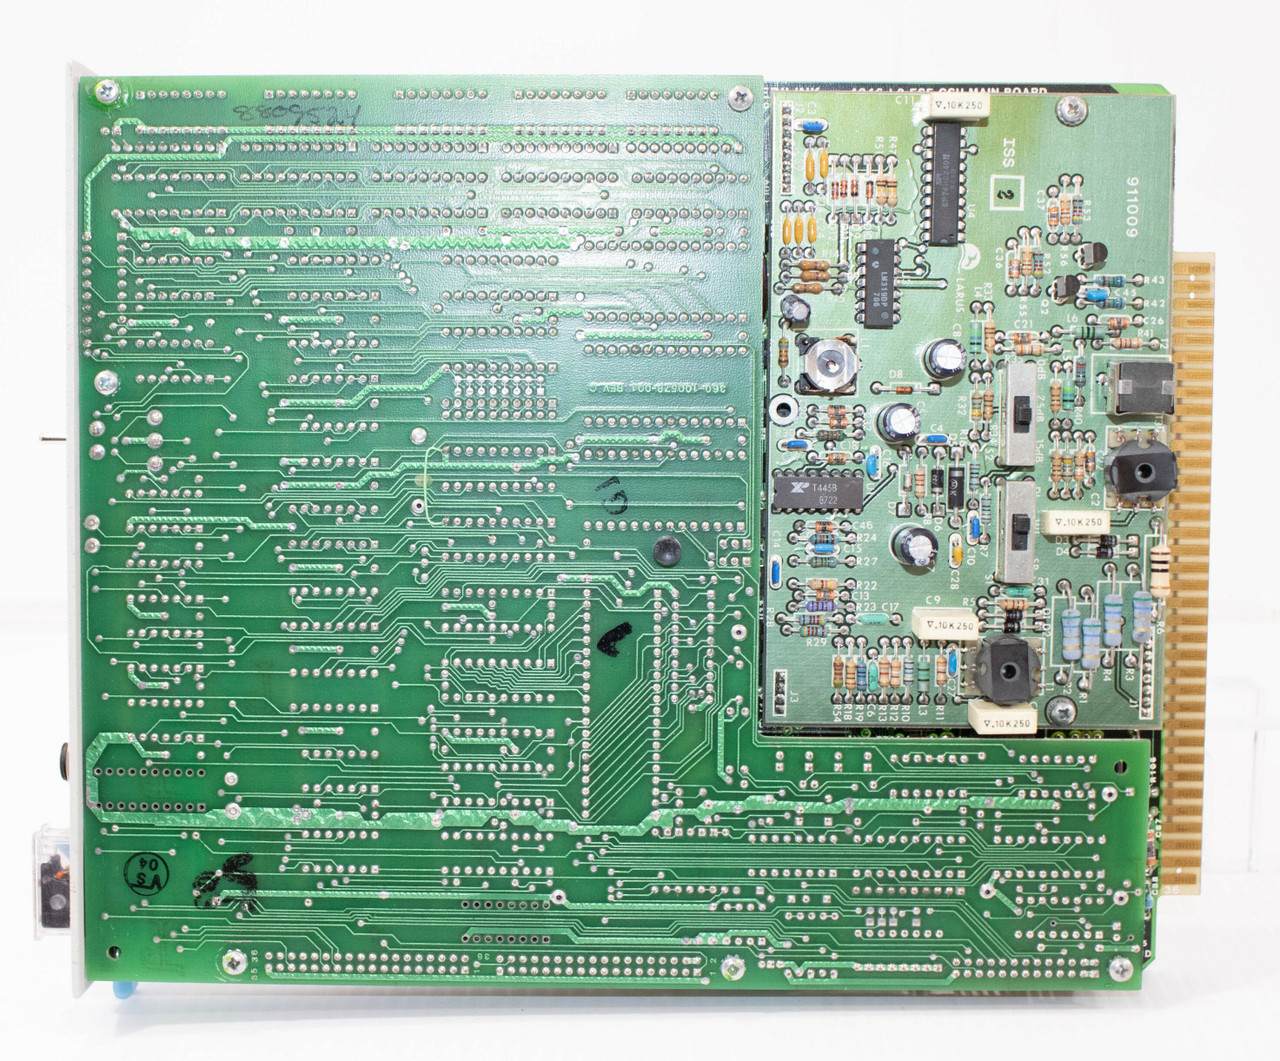 VERILINK 4016-R ESF CSU IT Hardware Diagnostic Interface Industrial Automation